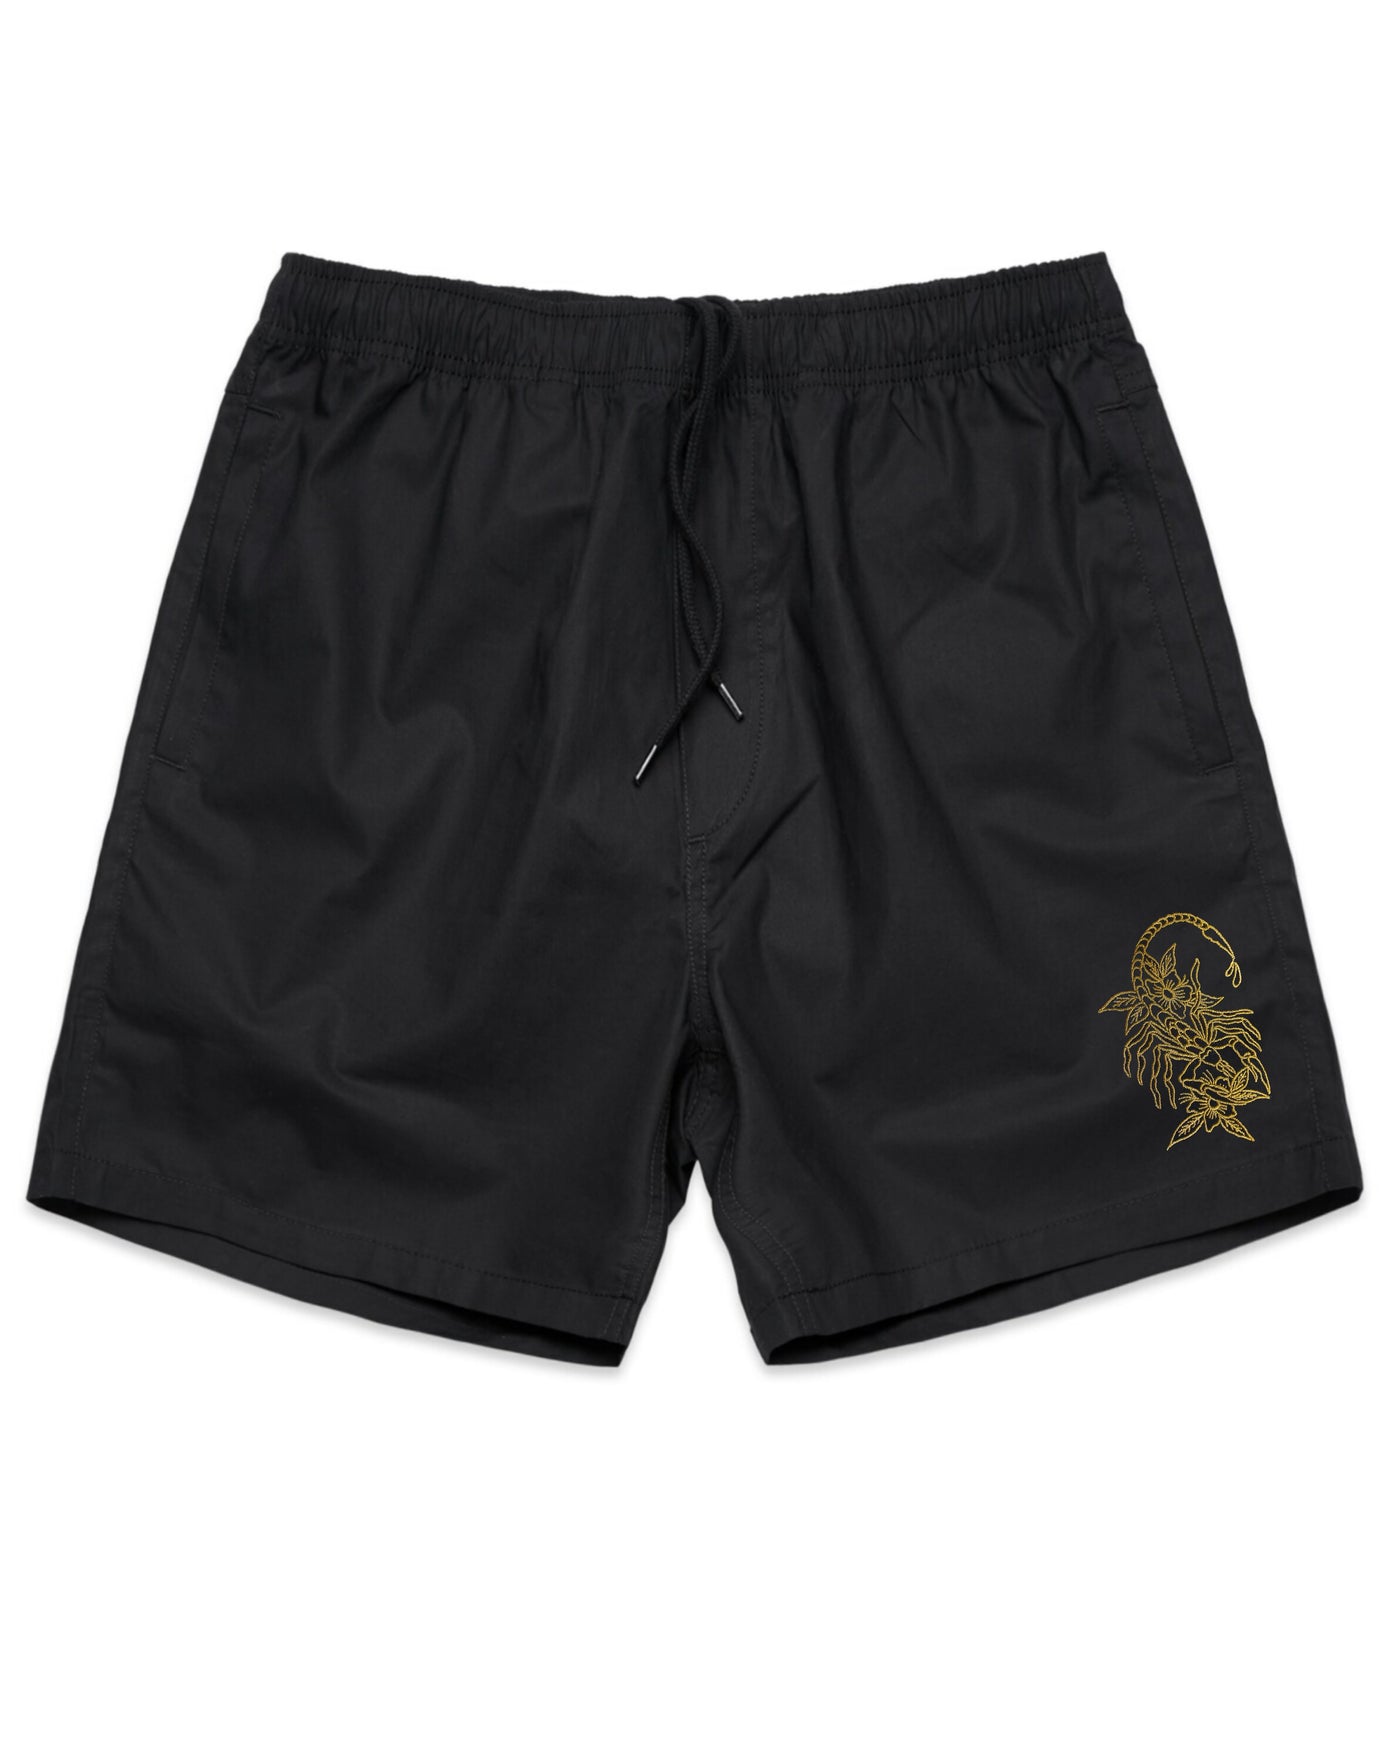 Scorpion Beach Shorts